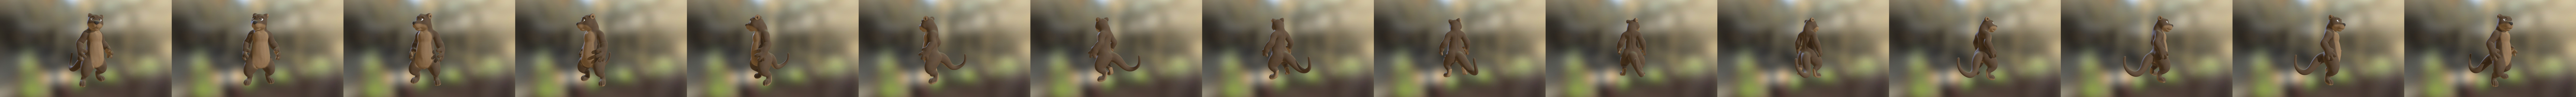 Otter T pose - Download Free 3D model by Killer O (@KillerOz1) [82b92db]